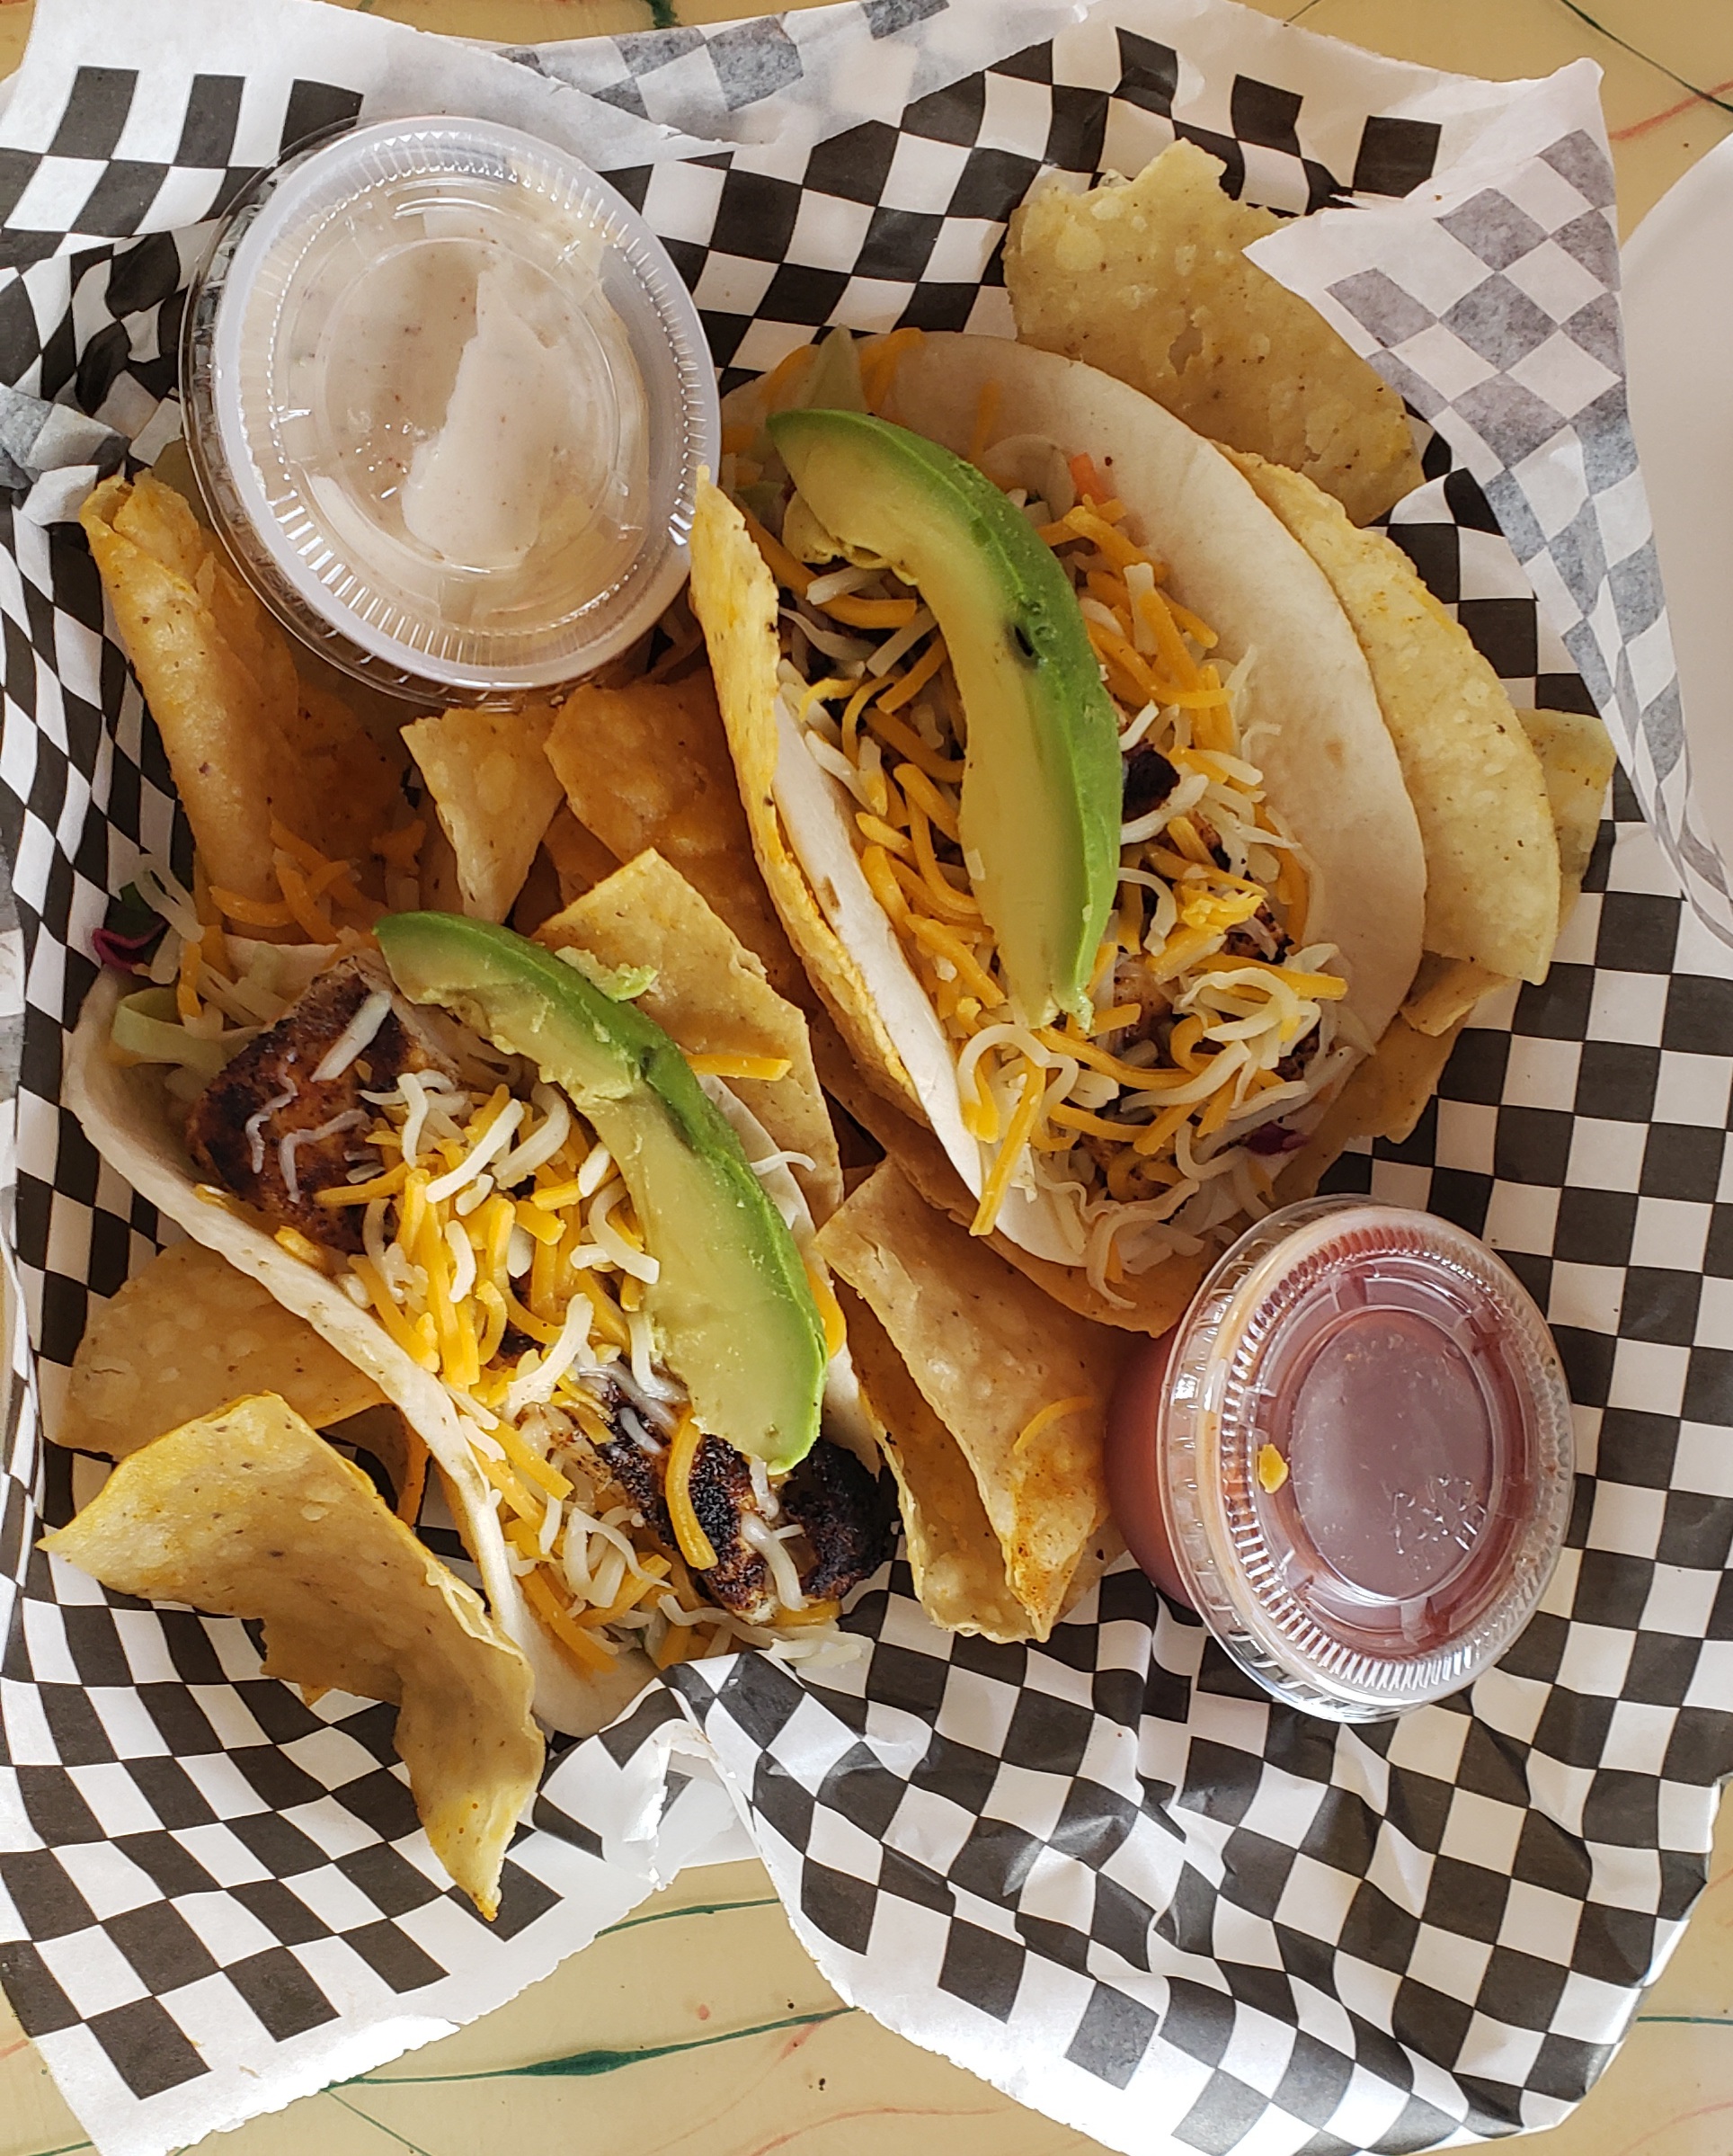 Blackened Mahi Tacos with Baja Sauce - $11.95